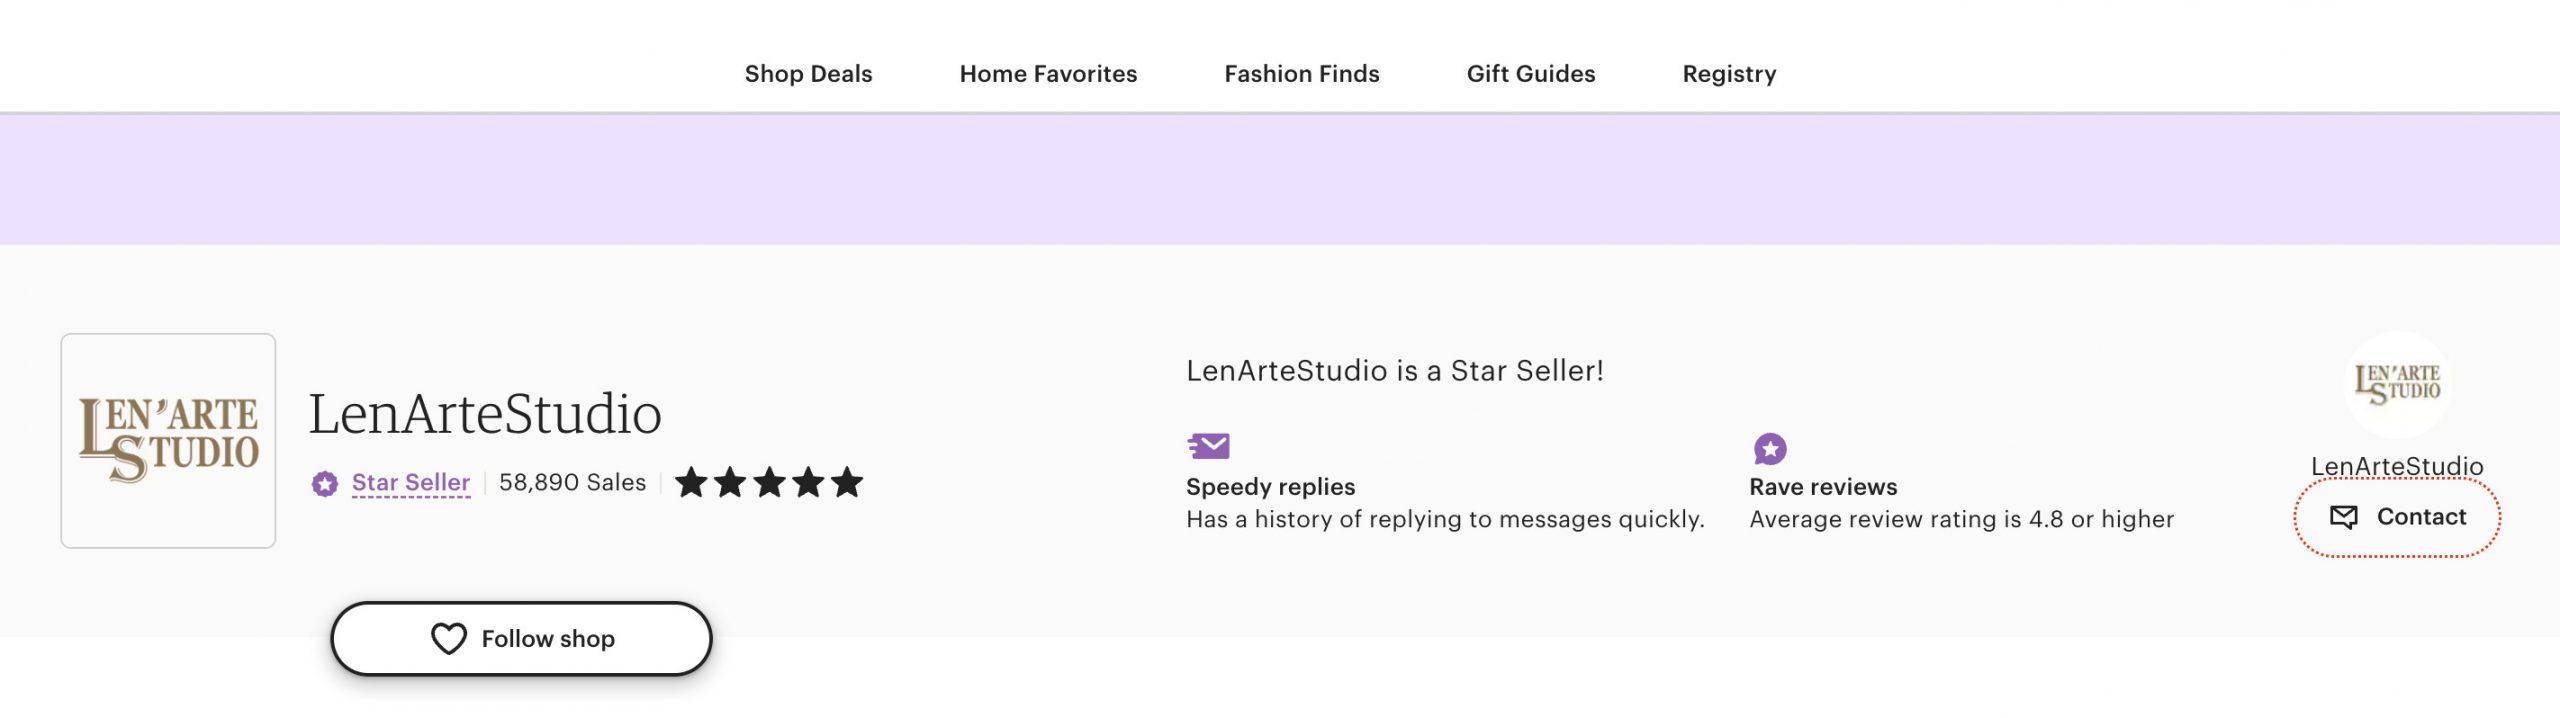 LenArteStudio etsy store